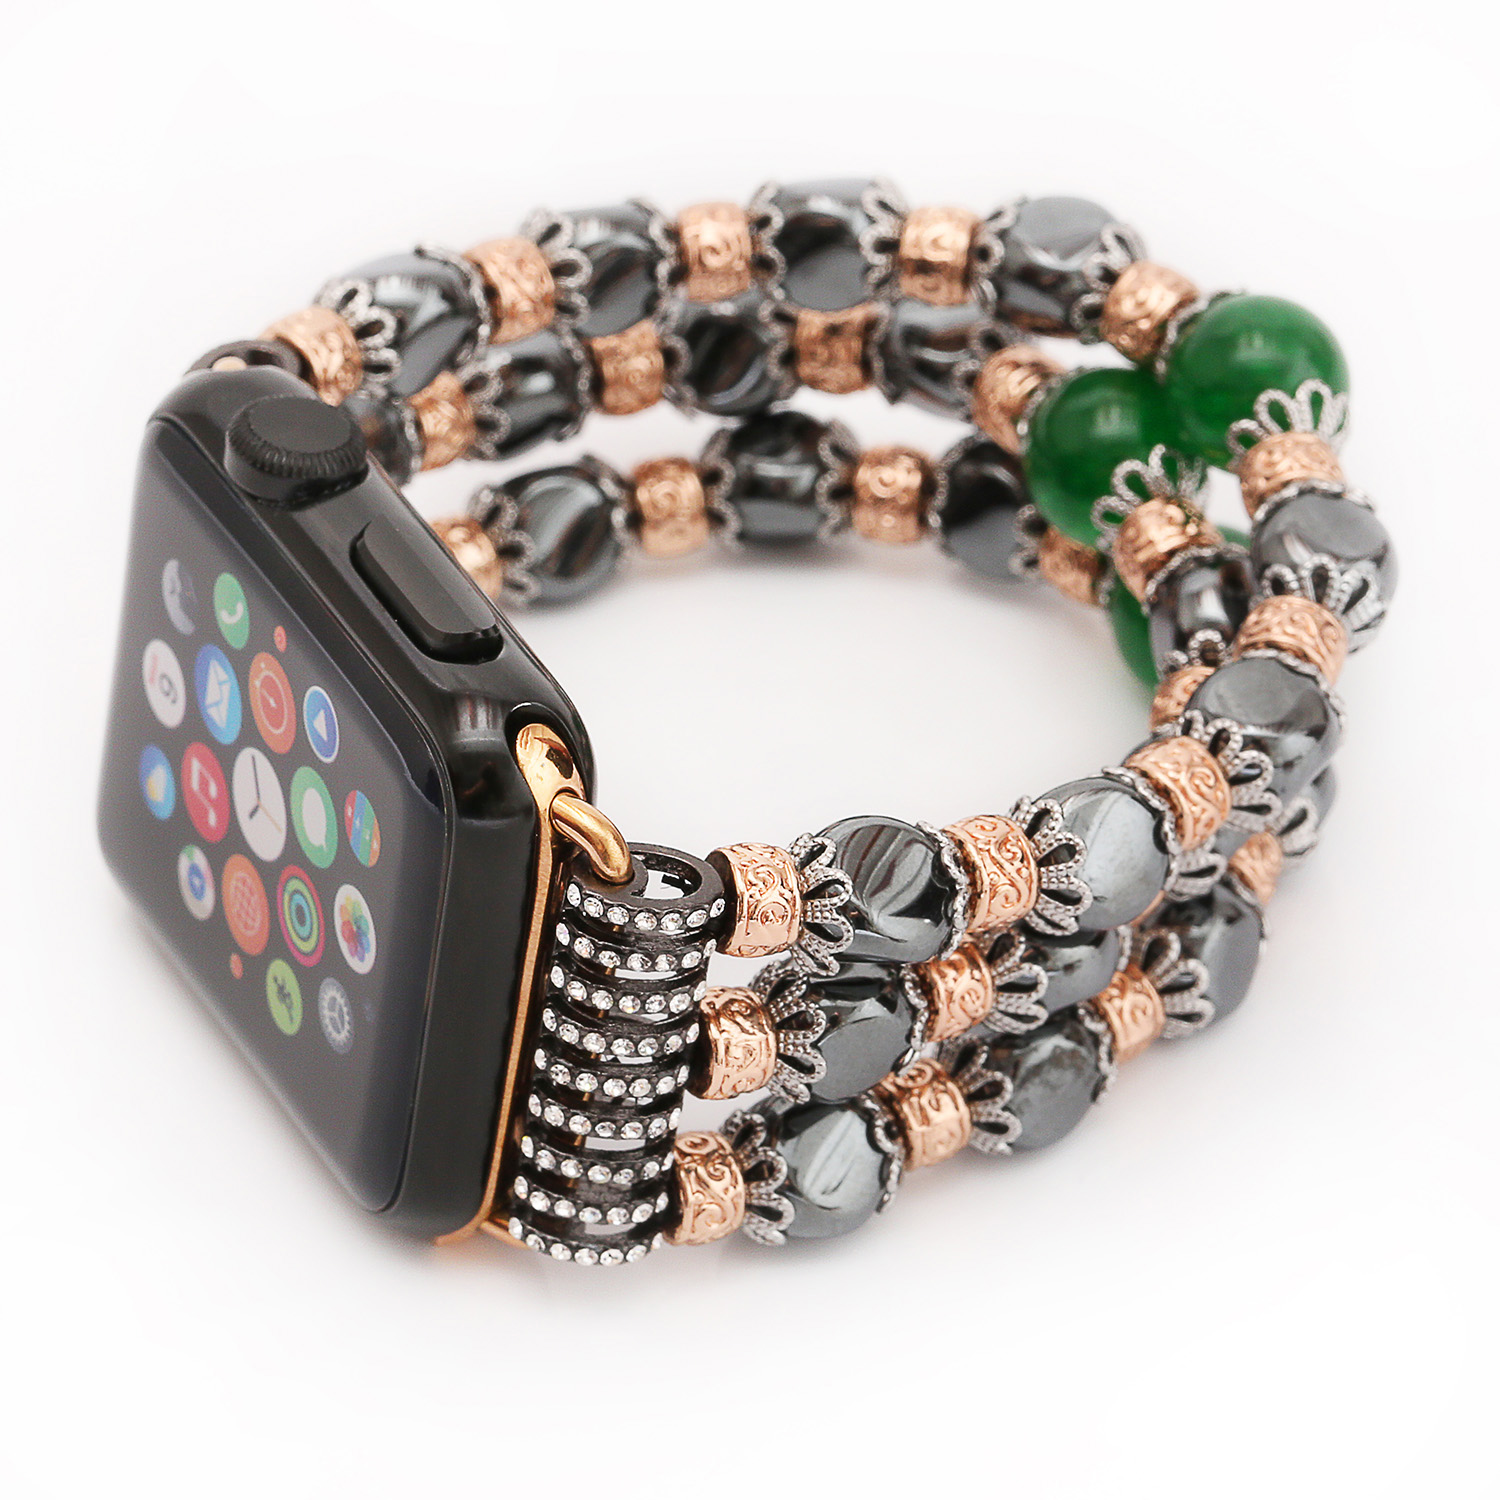 Hermoso e impresionante Hematite Hand Bead Apple Watch Band